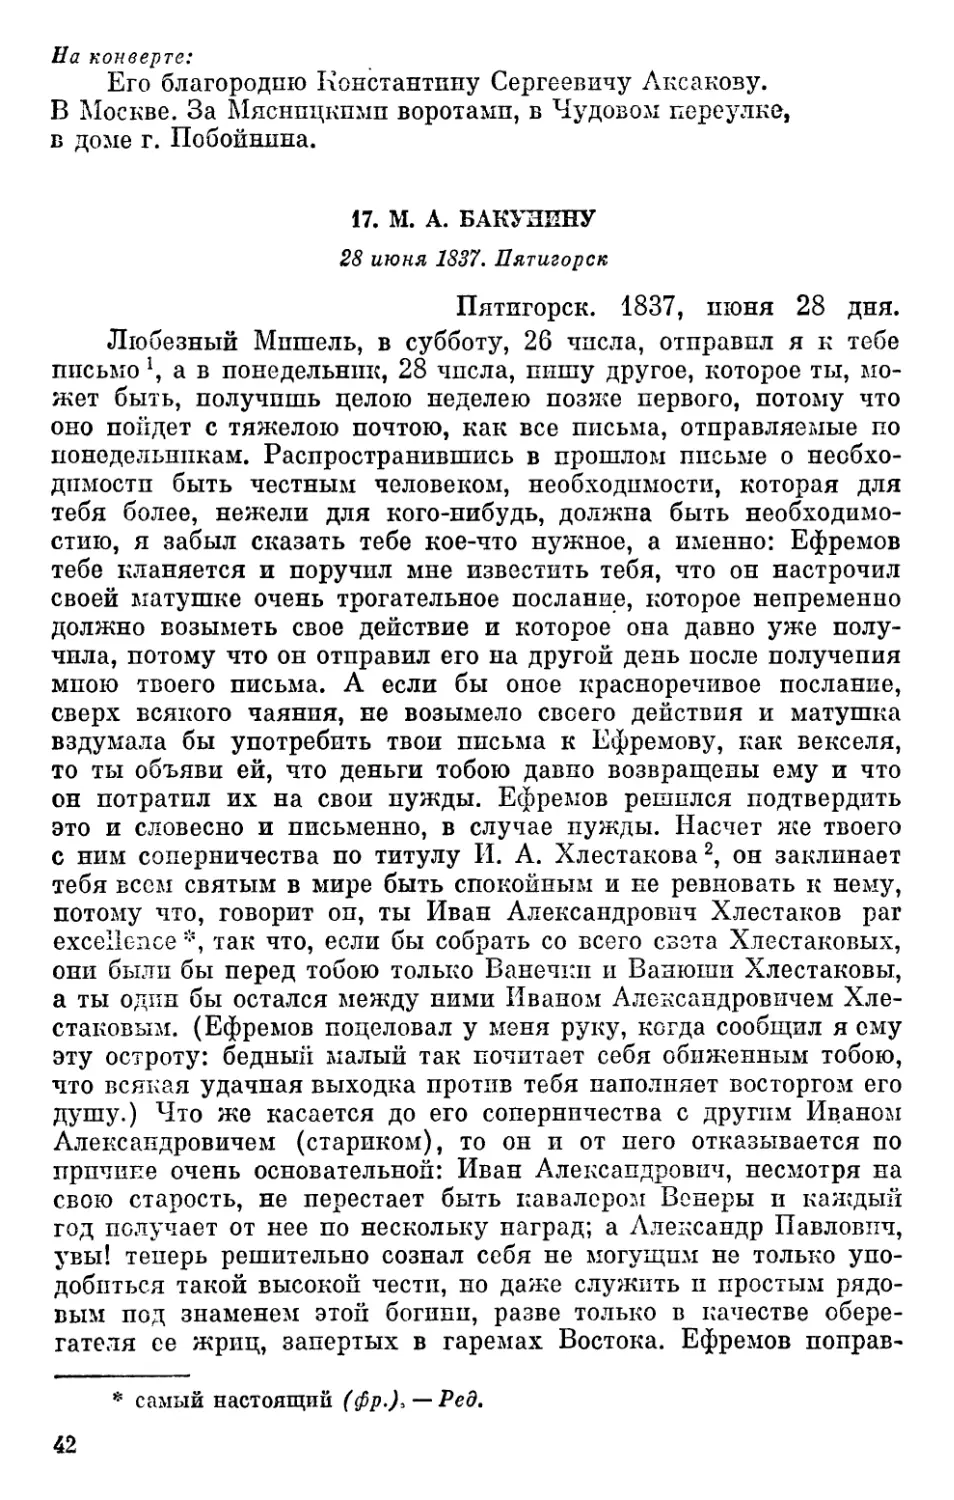 17. М. А. Бакунину. 28 июня 1837